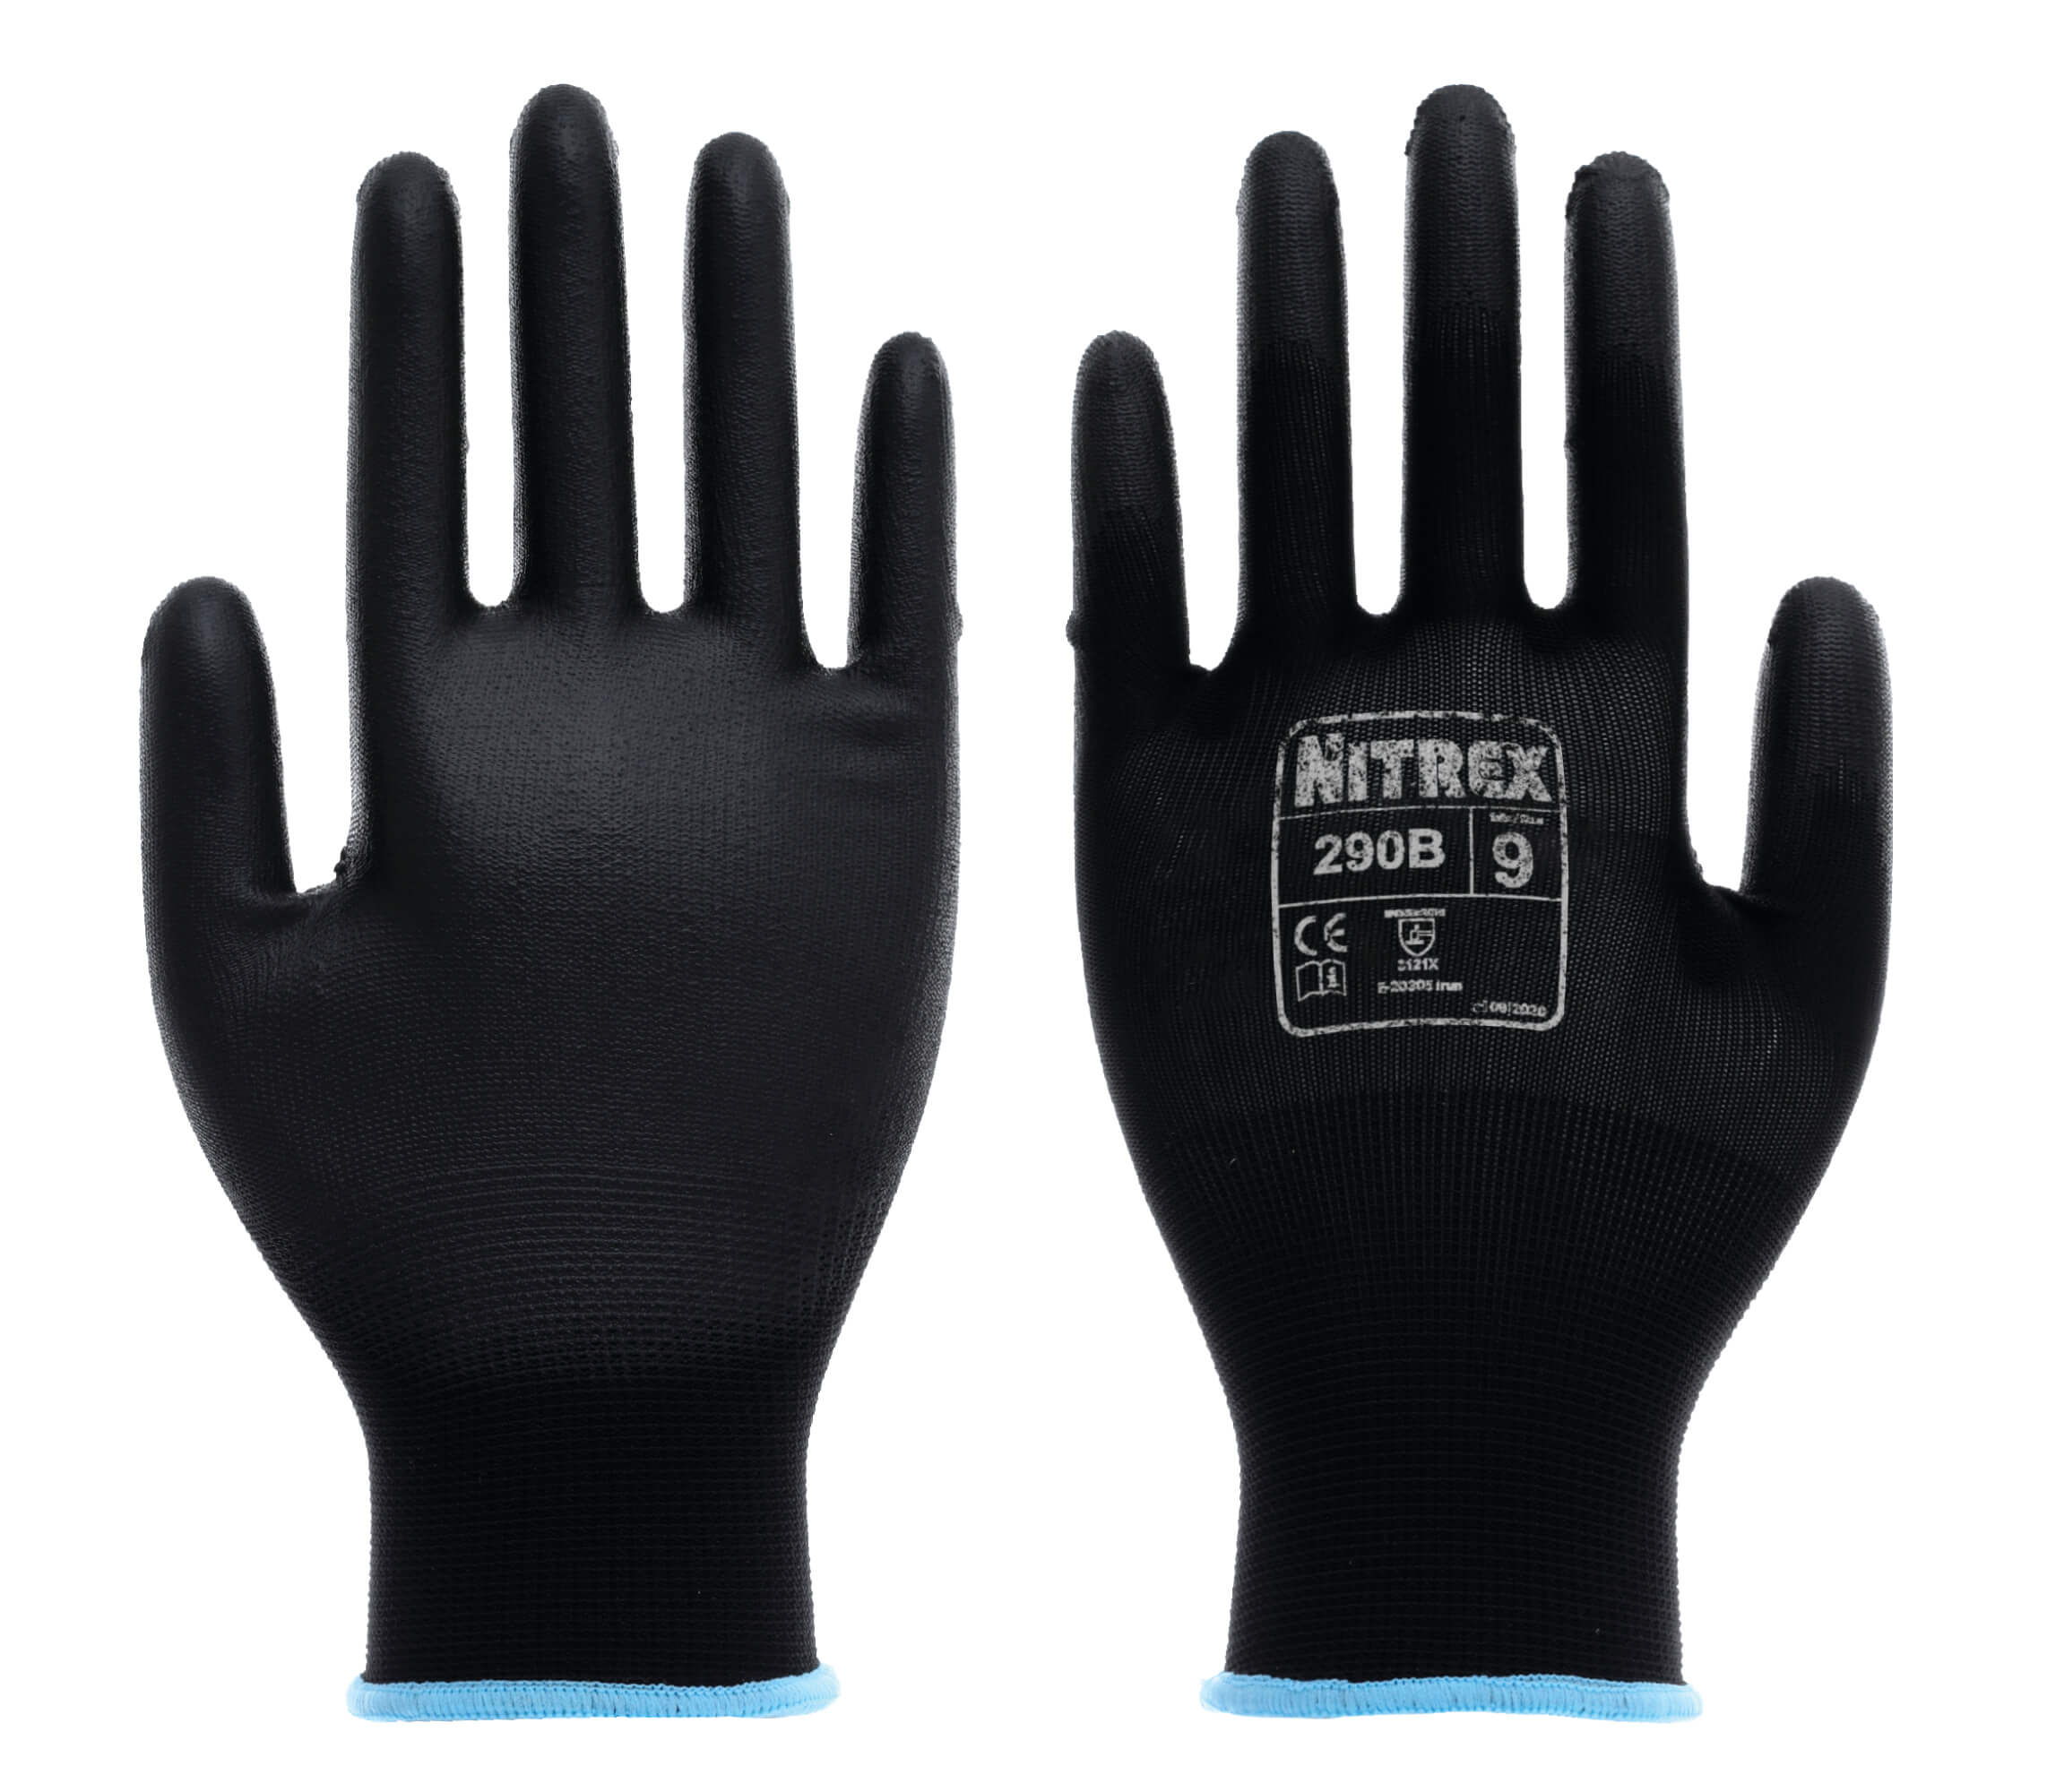 Nitrex 290 - Black PU Palm Coated Glove - Size 6/XS 